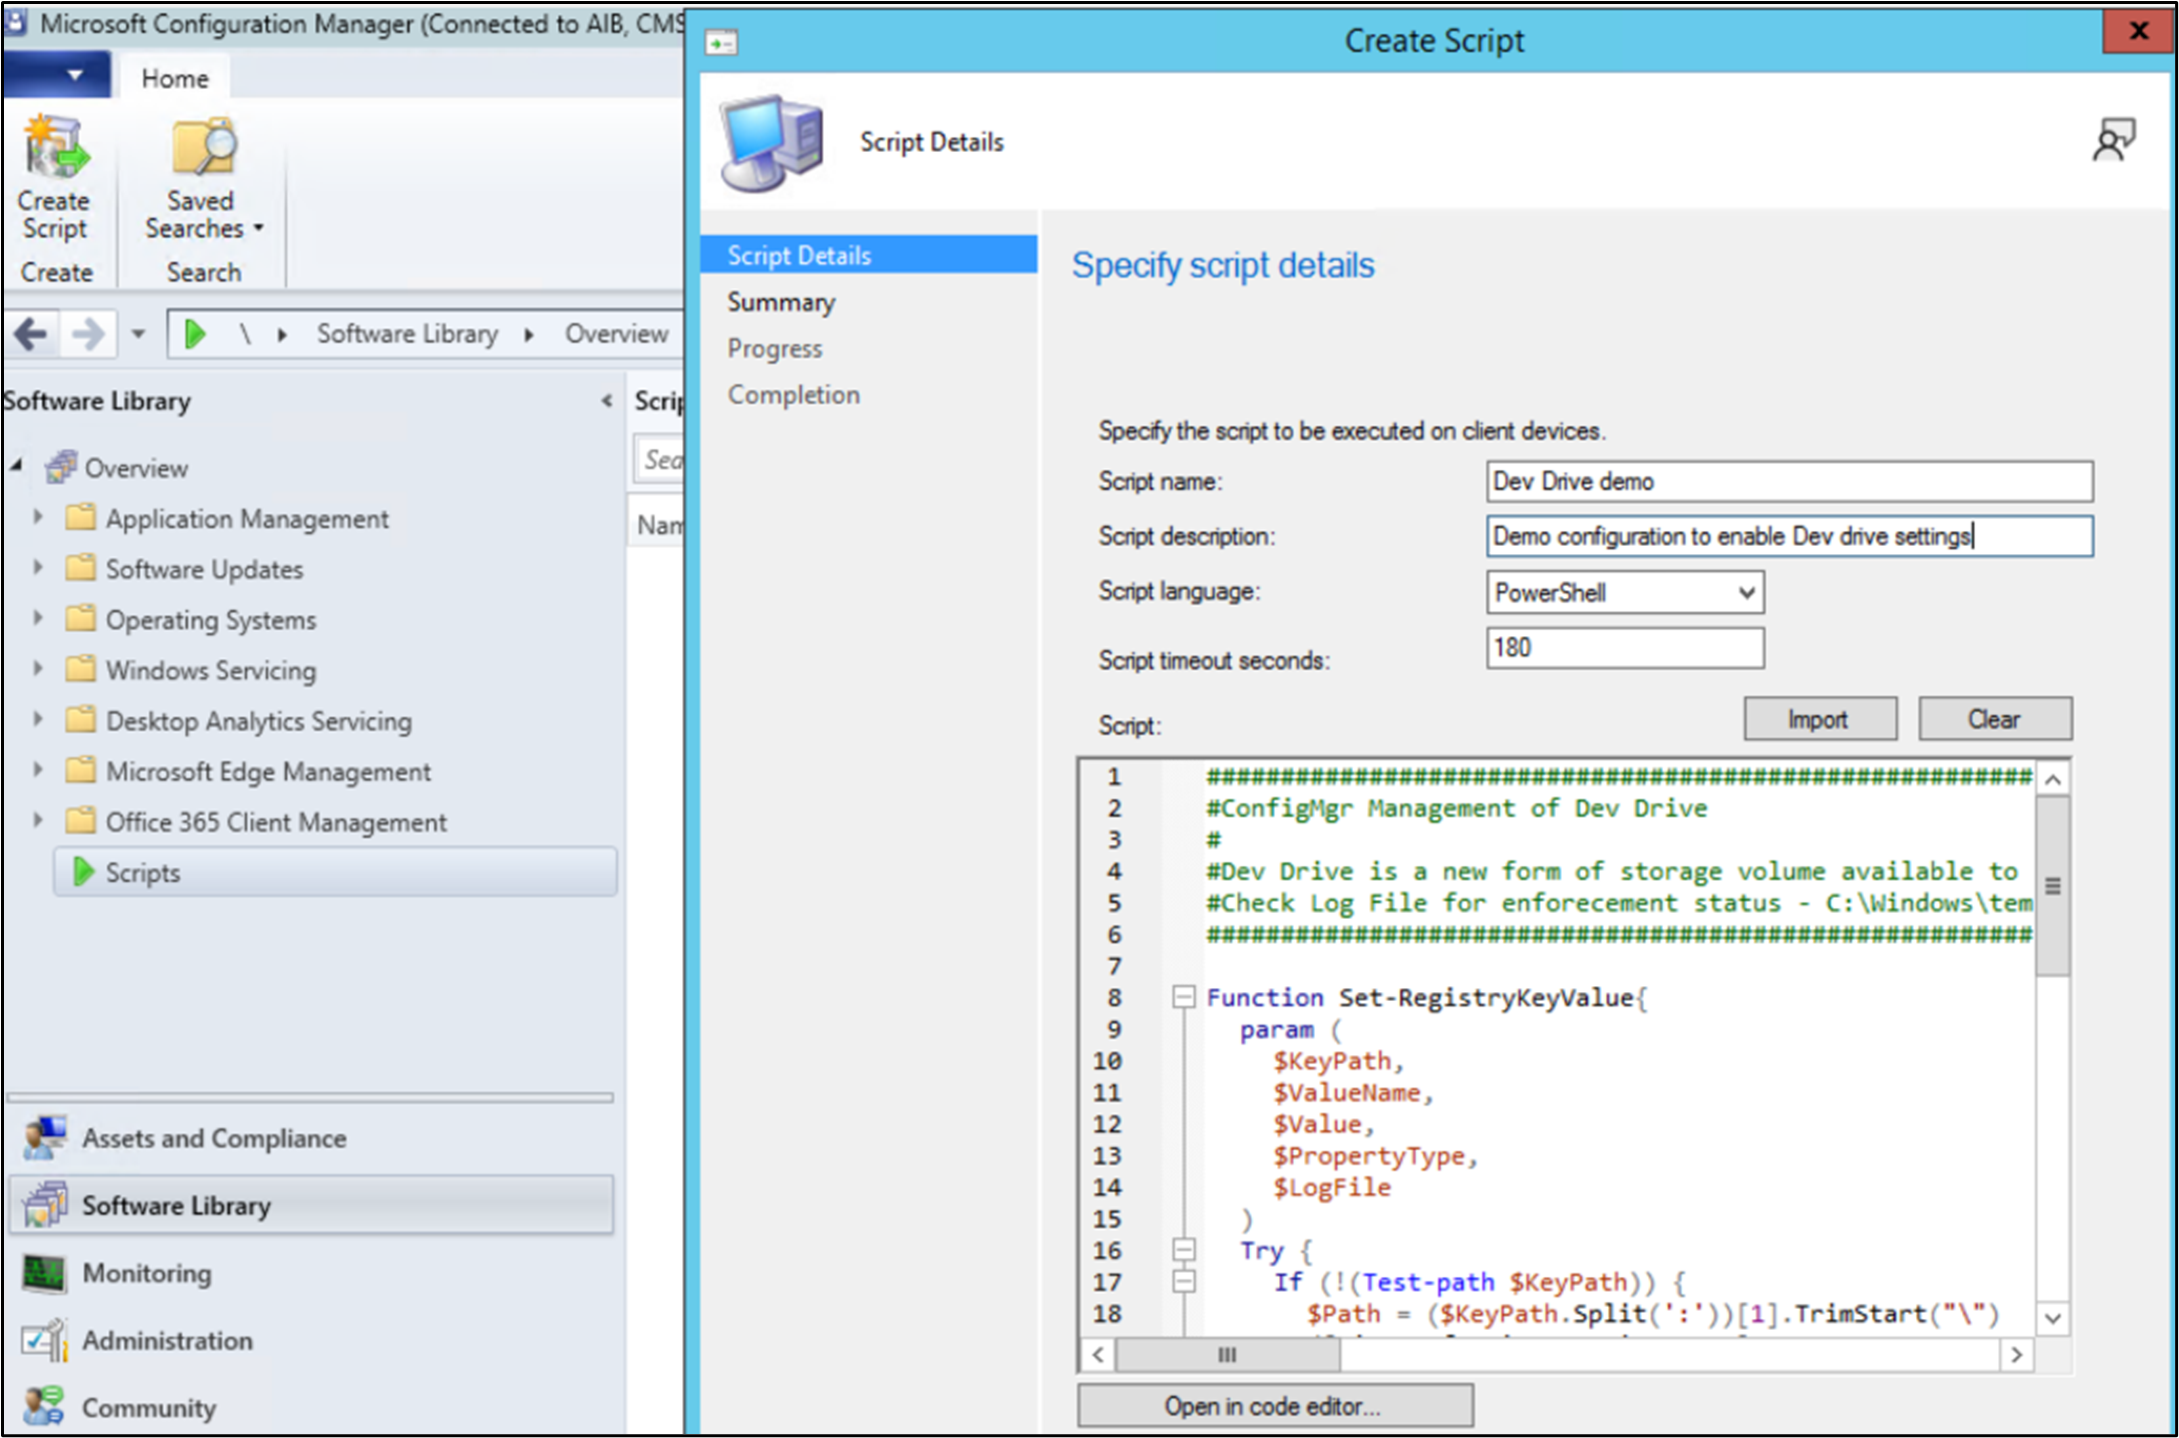 Microsoft Configuration Manager“创建脚本”窗口的屏幕截图，其中显示了脚本名称、说明、语言、超时秒数和实际脚本等详细信息